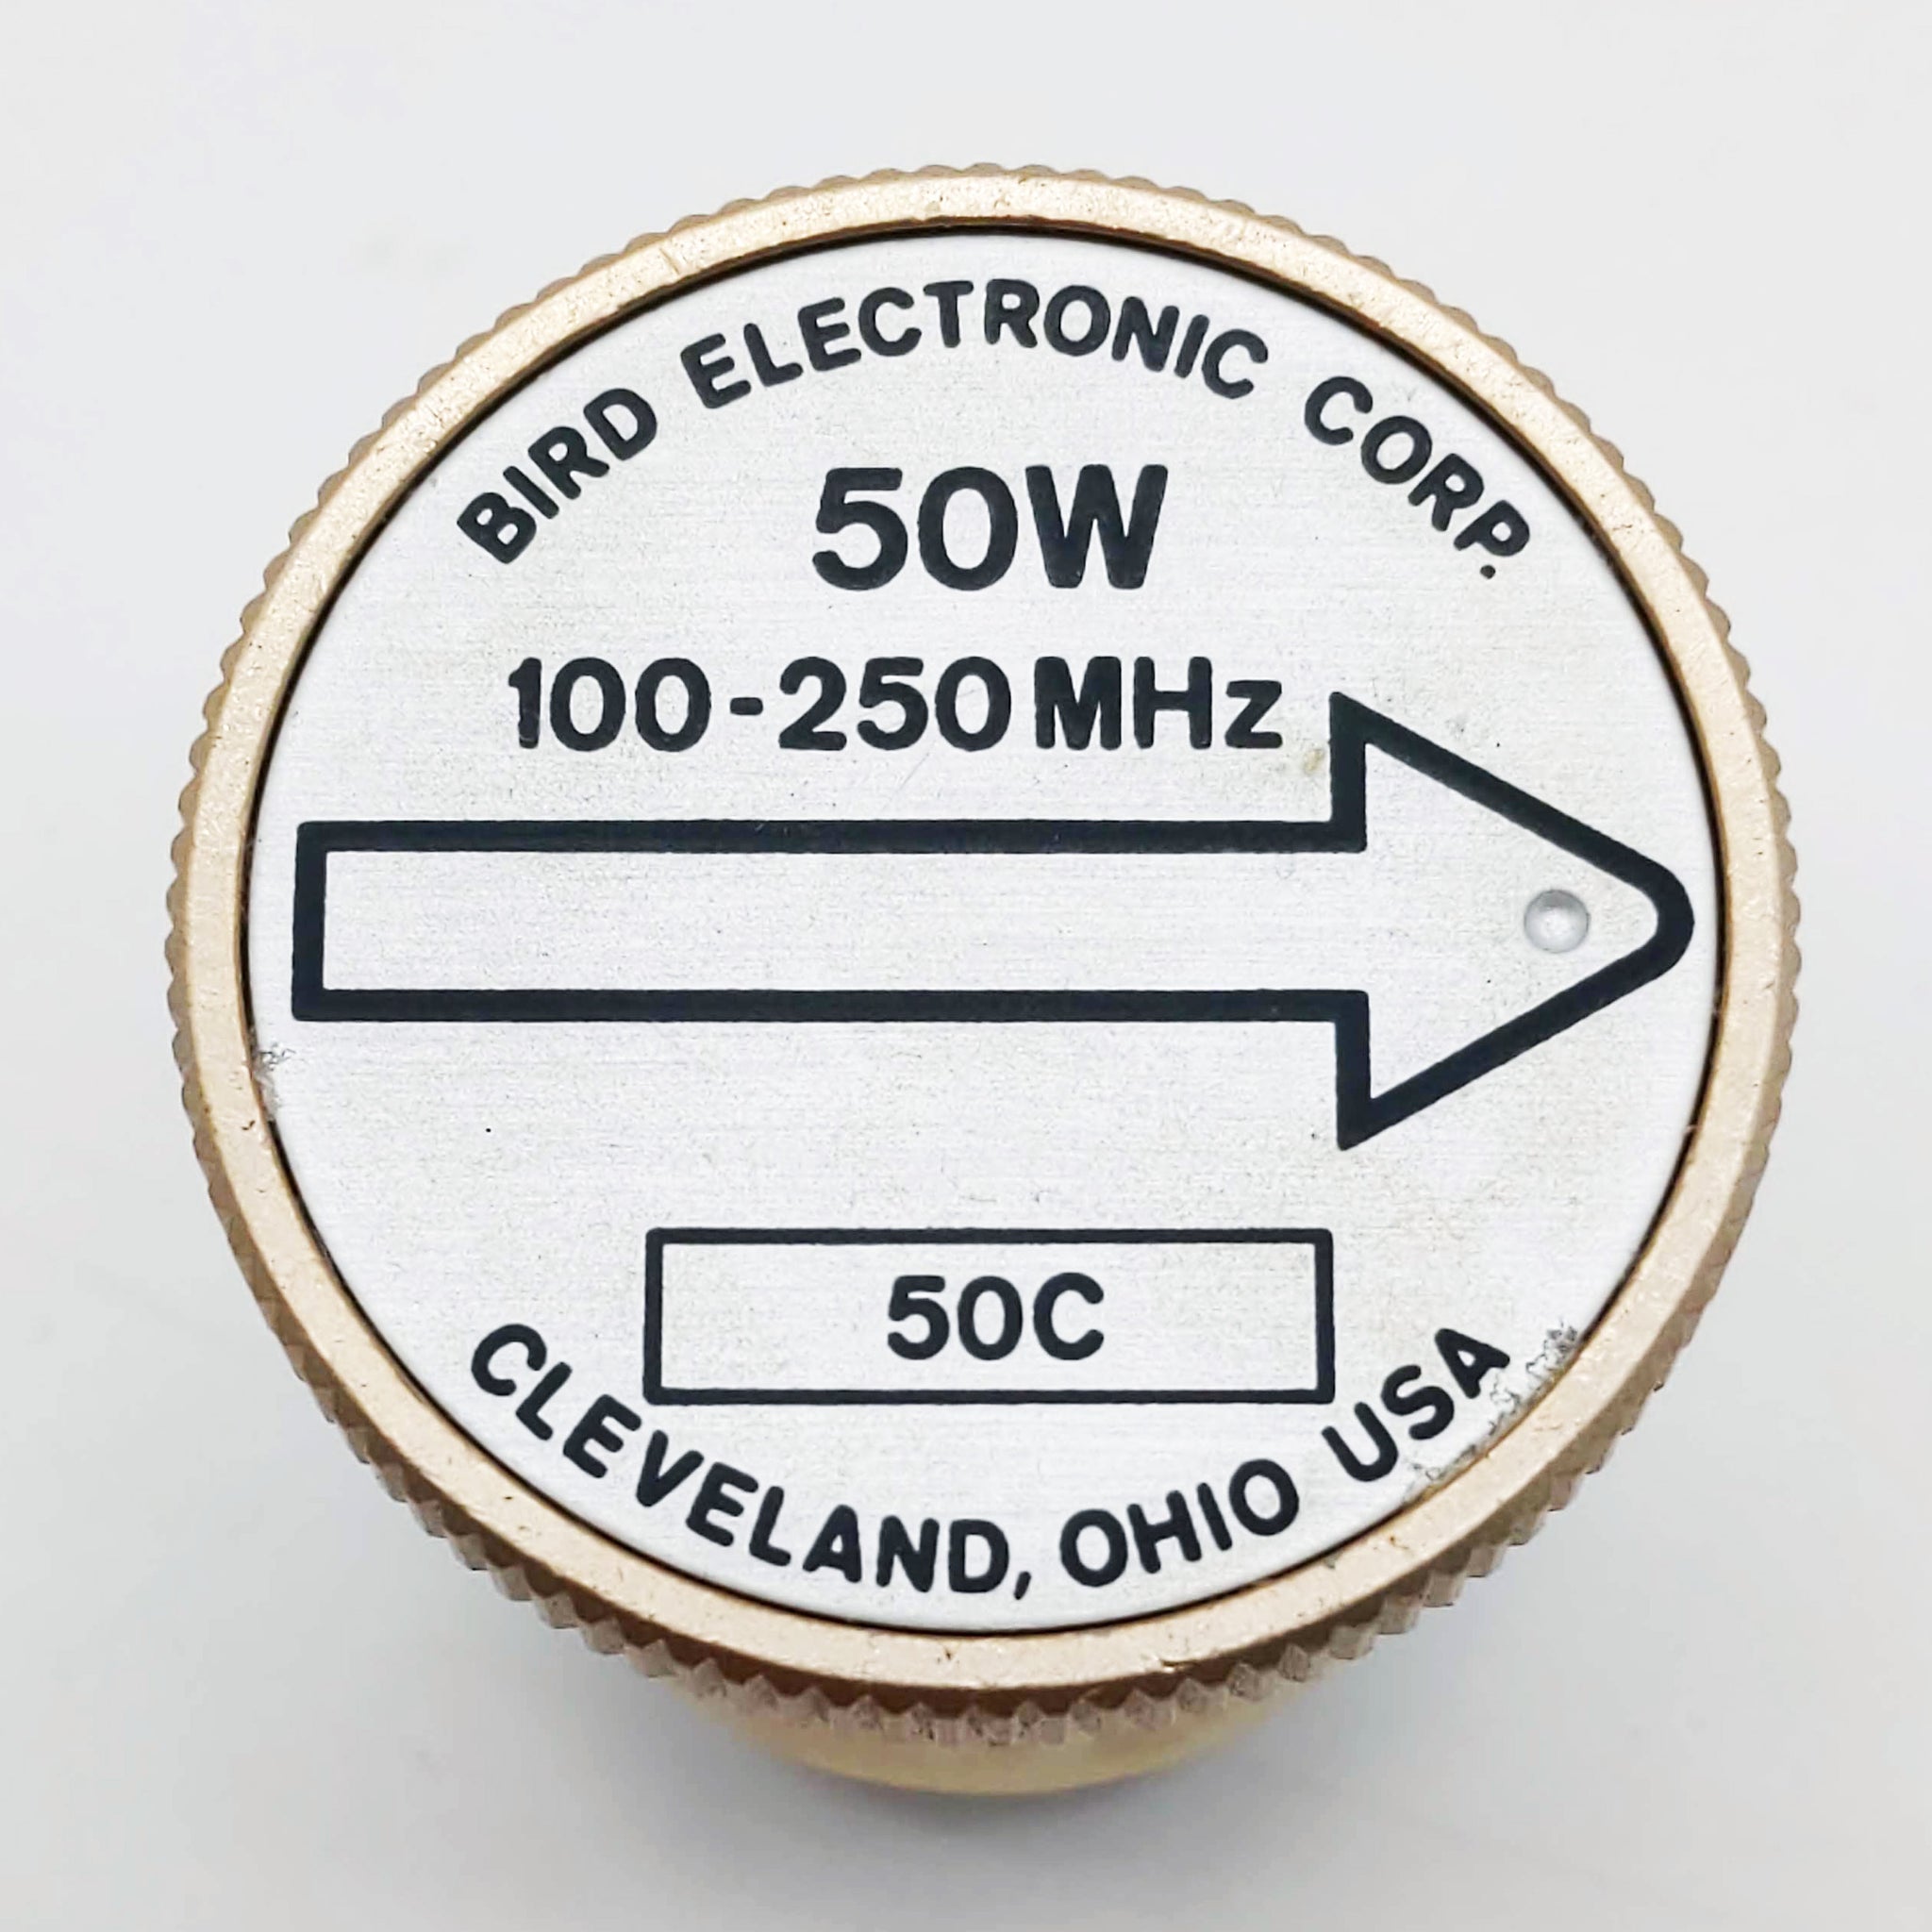 Bird Element (Slug) 50W, 100-250 MHz, 50C